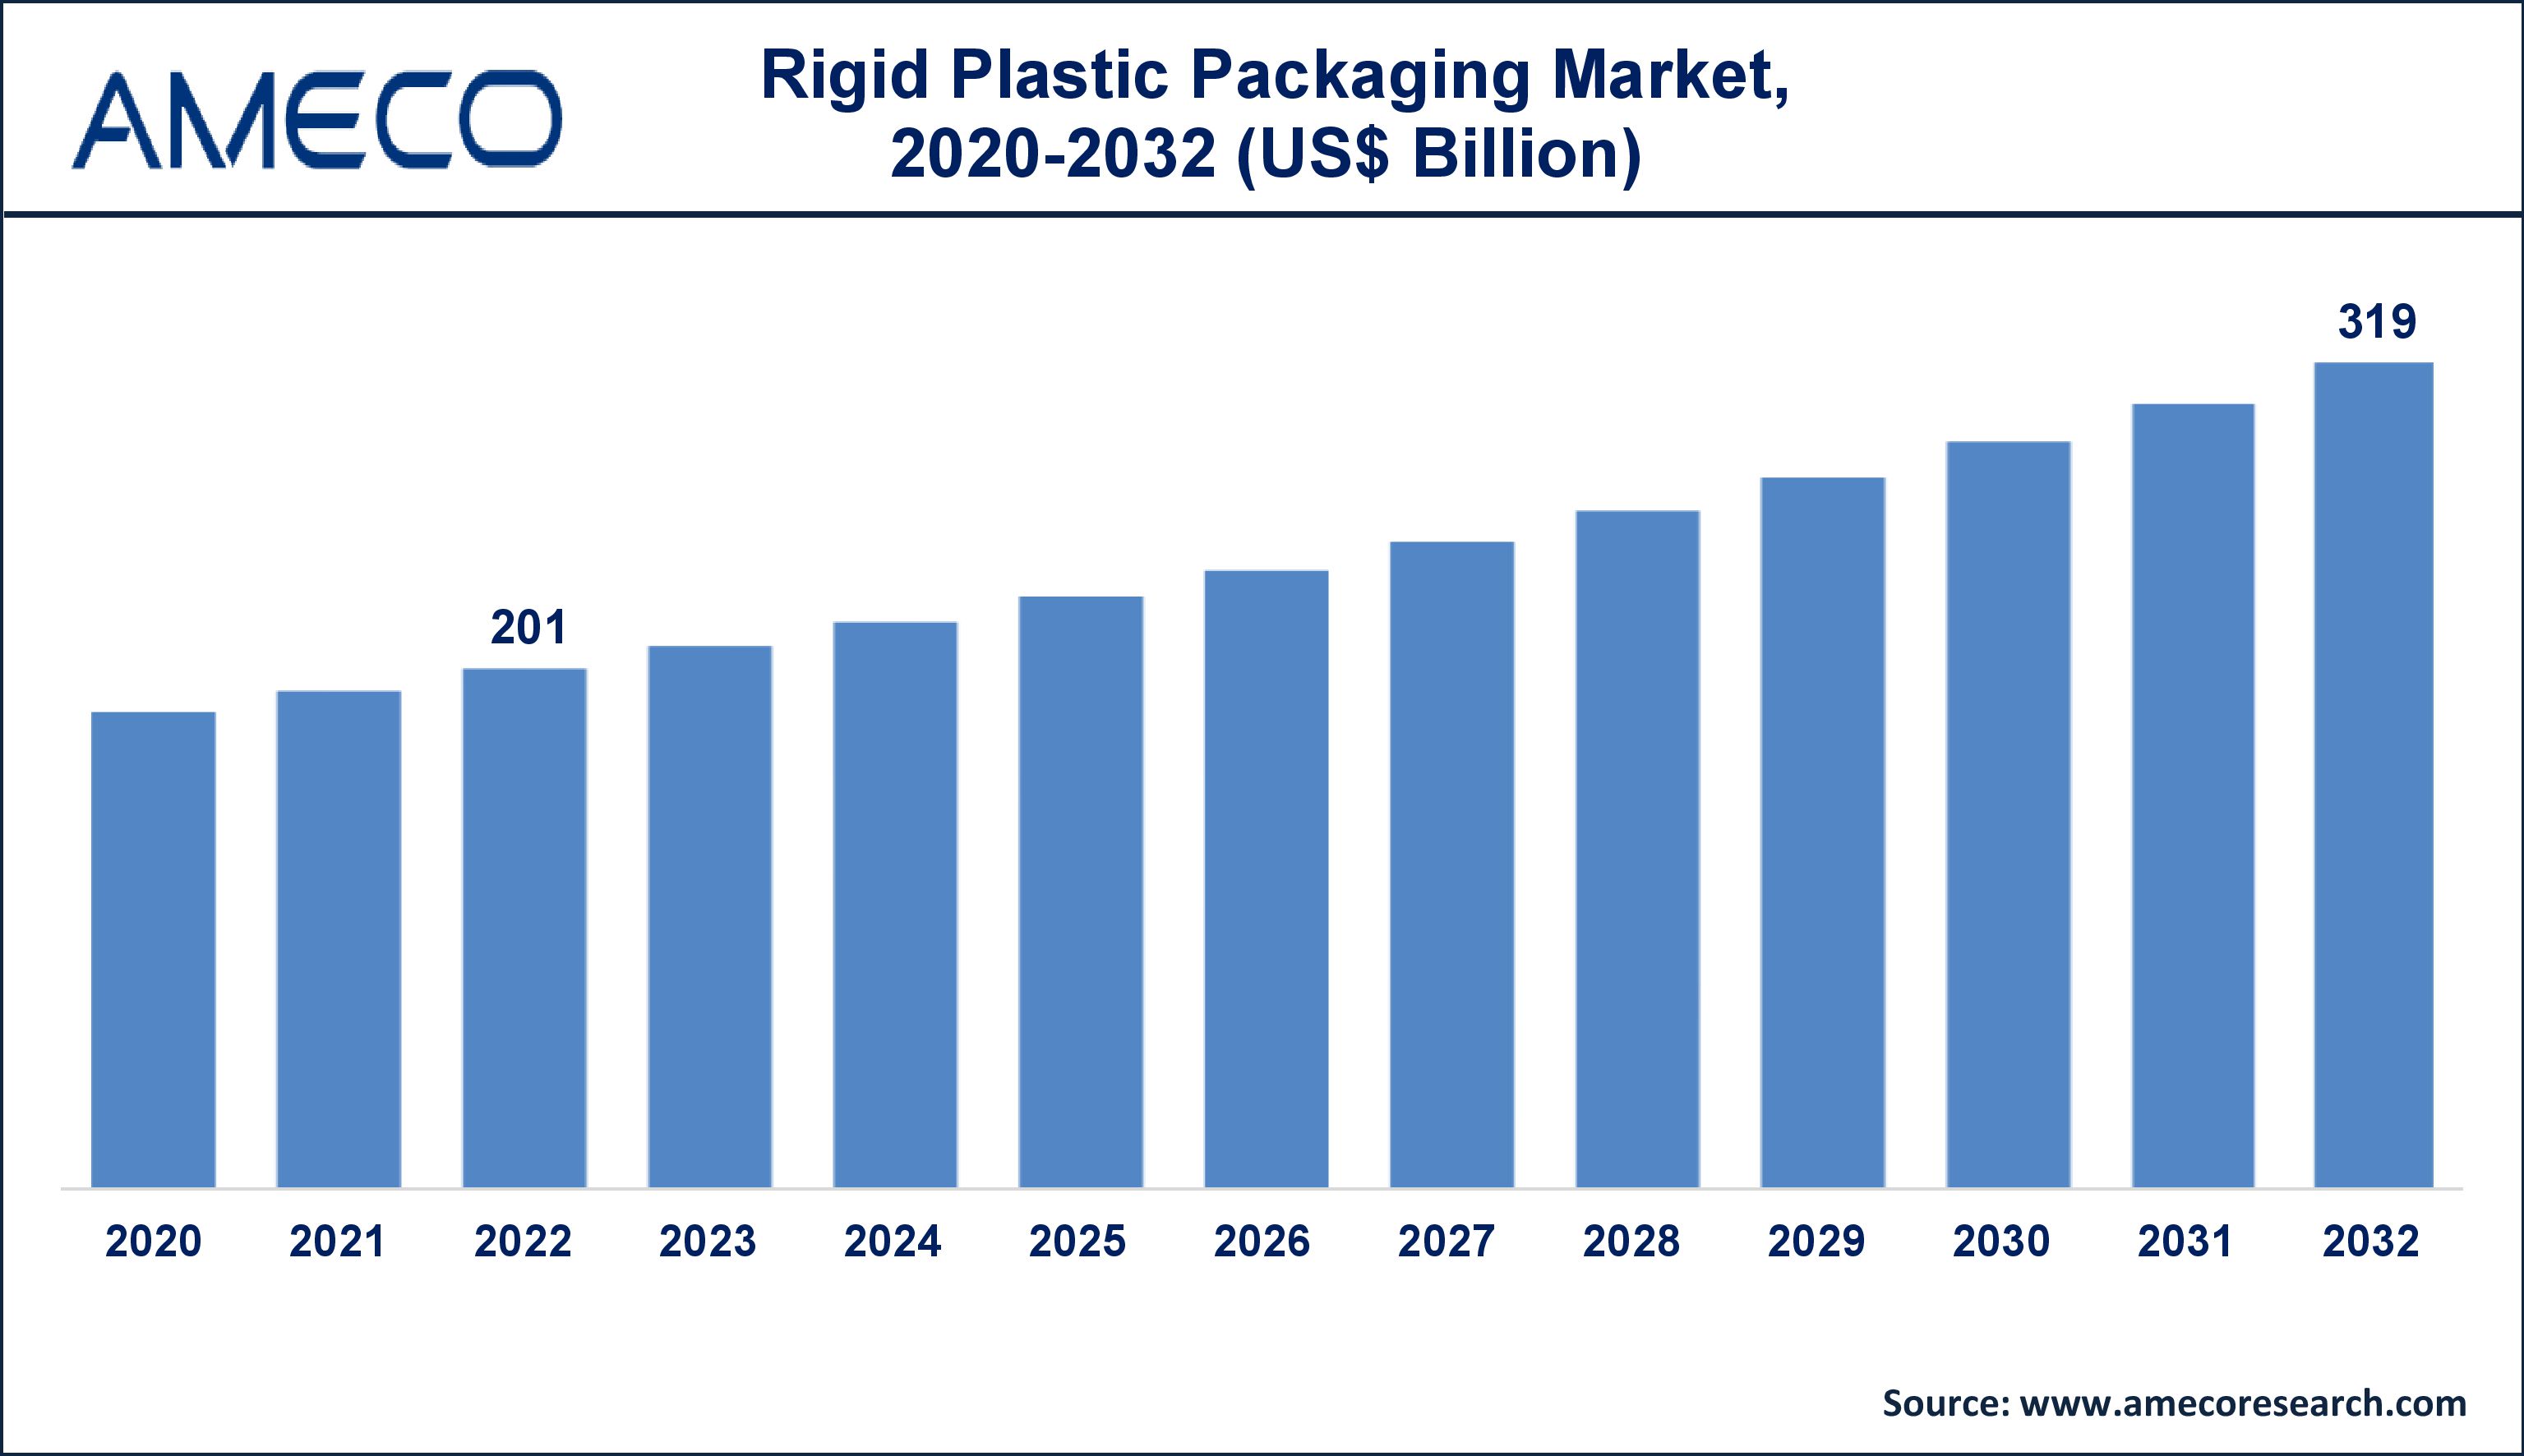 Rigid Plastic Packaging Market Dynamics